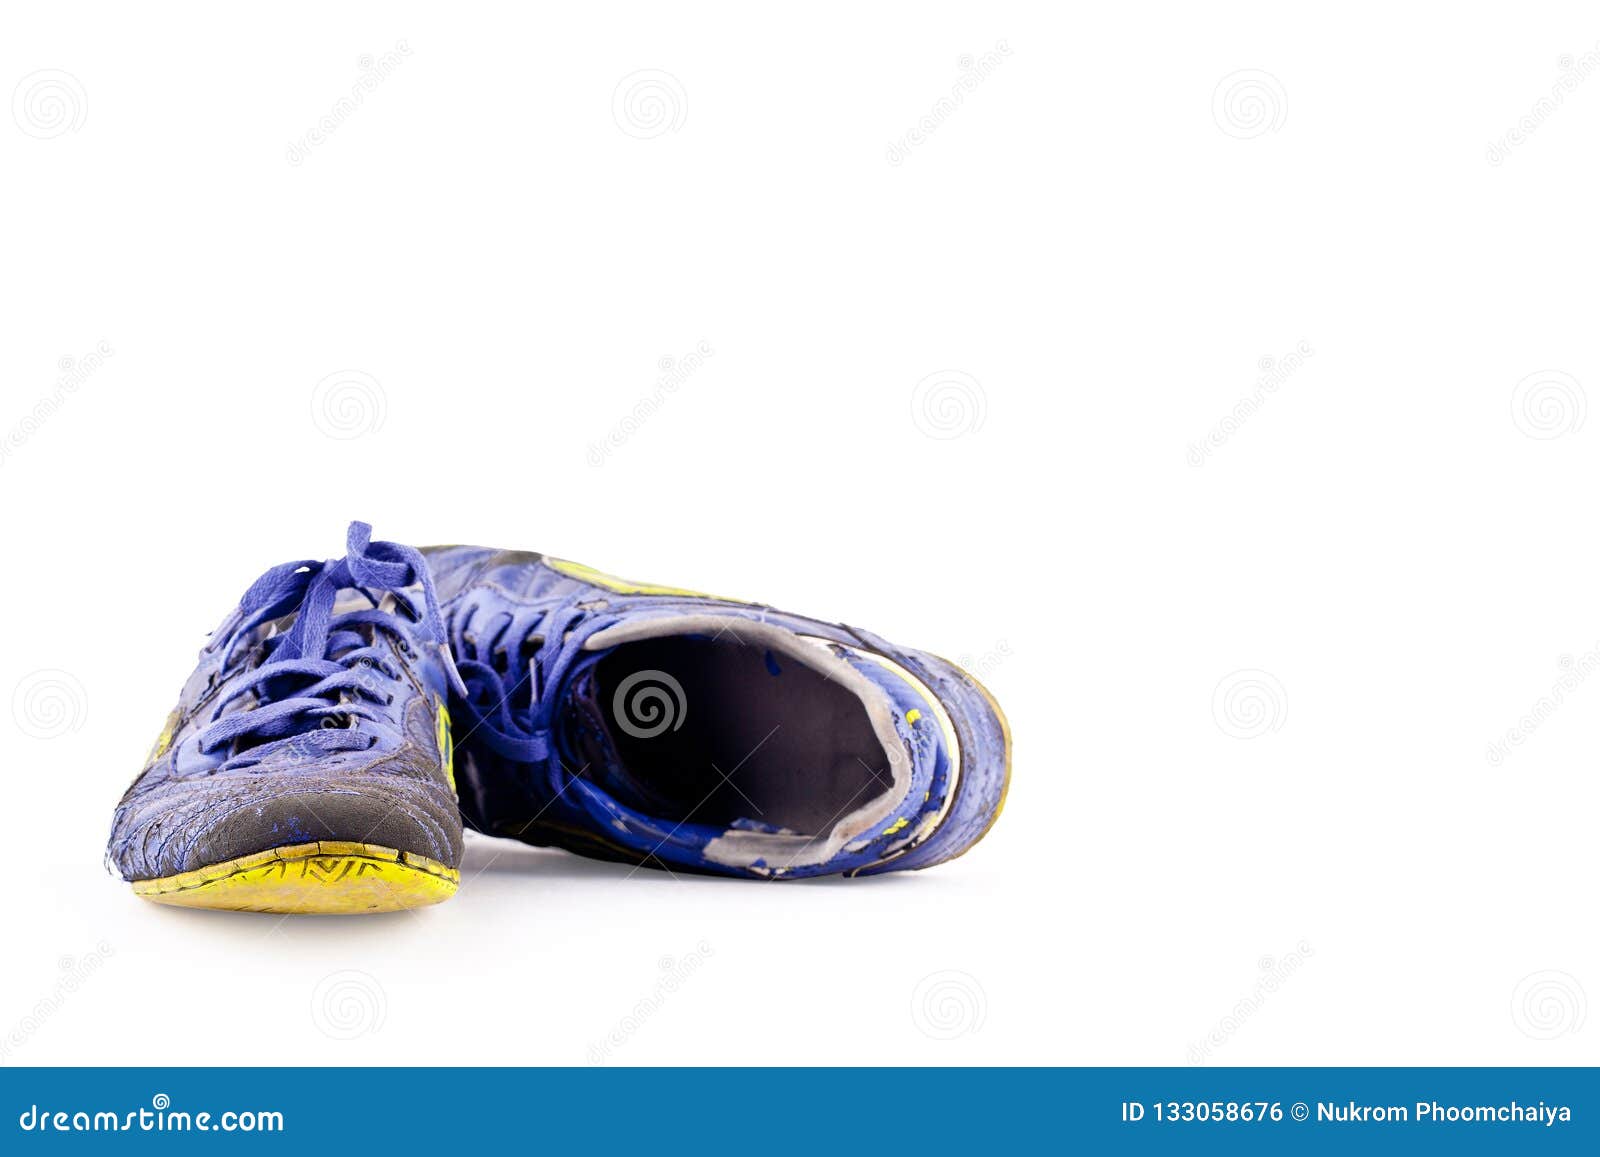 Old Football Shoes Damaged on White Background Futsal Sportware Object ...